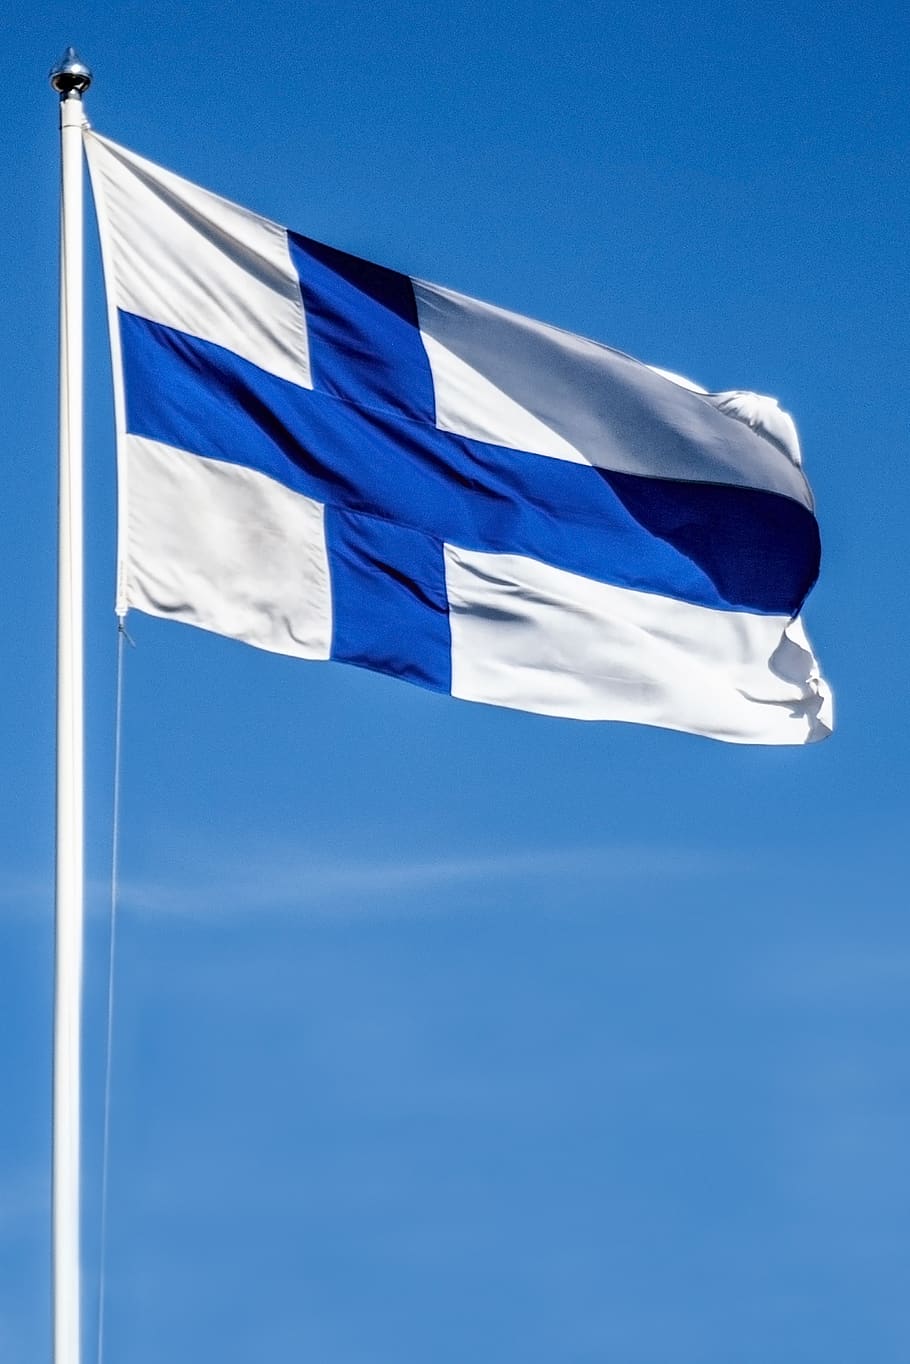 bandeira da finlândia, bandeira, cruz azul bandeira, bilhetes, azul e branco, azul, dia da independência, patriotismo, céu, vento